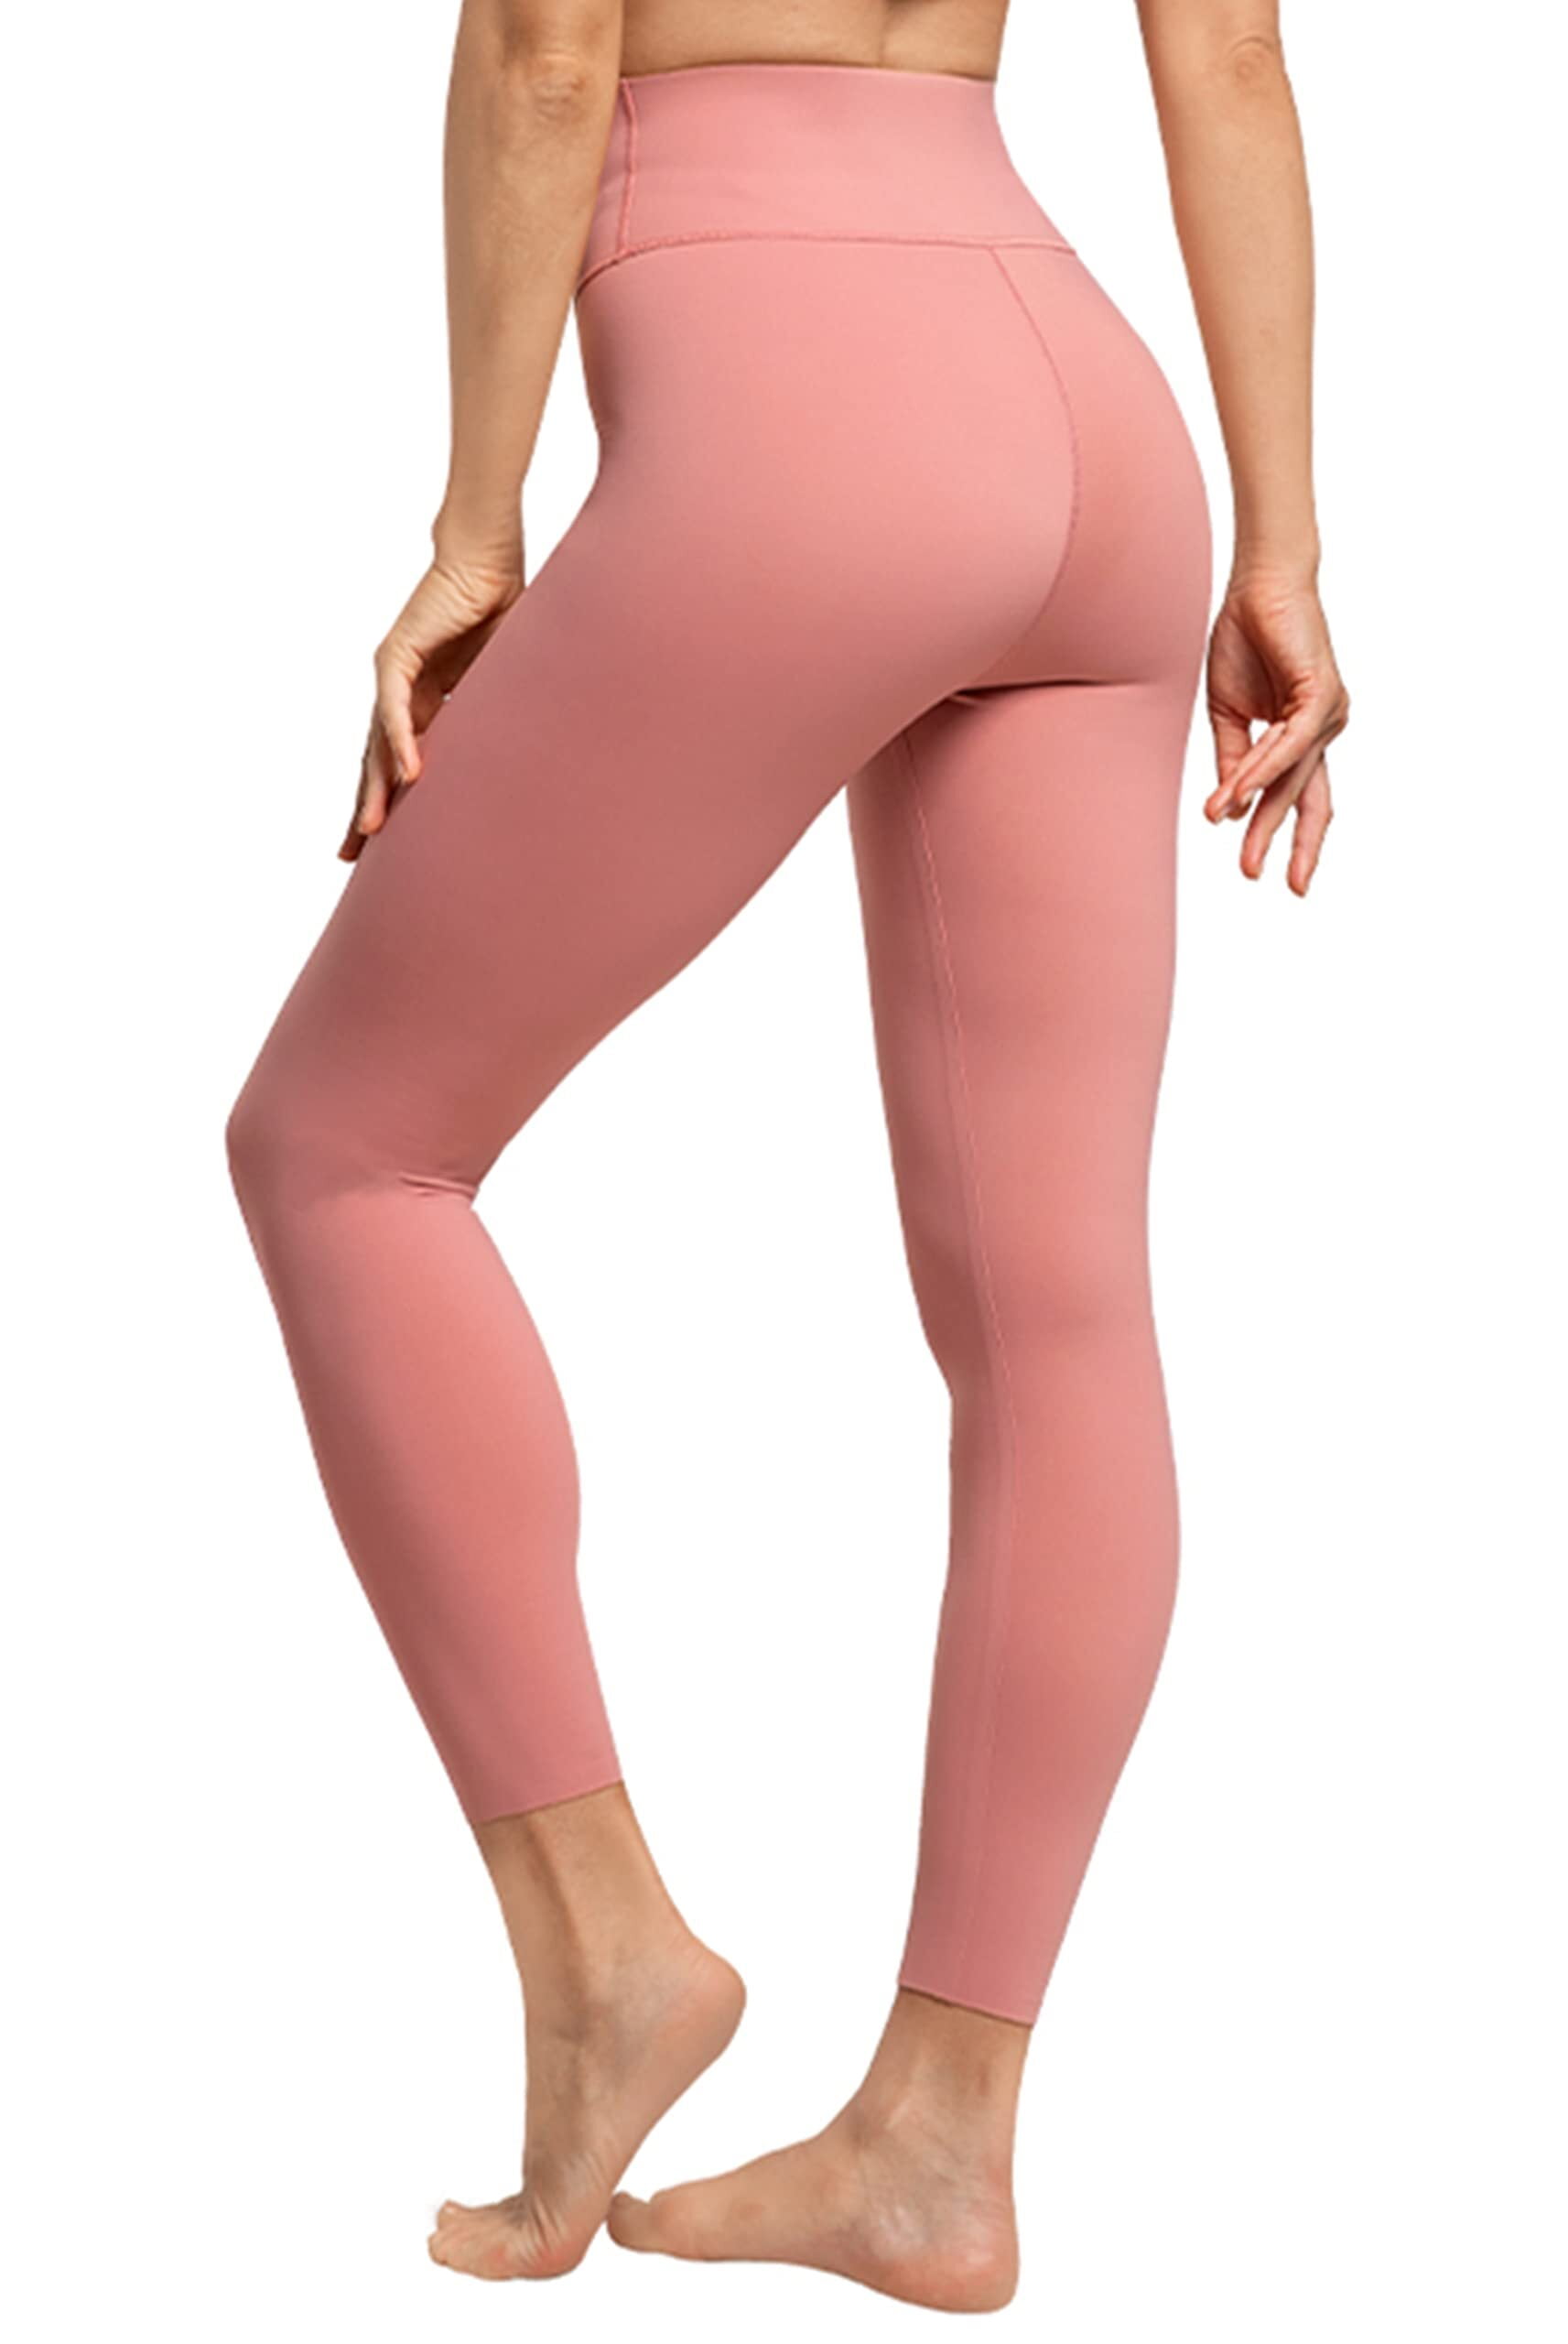 Leggings for Women High Waist Yoga Pants Tummy Control 4 Way Stretch  Workout Pants 